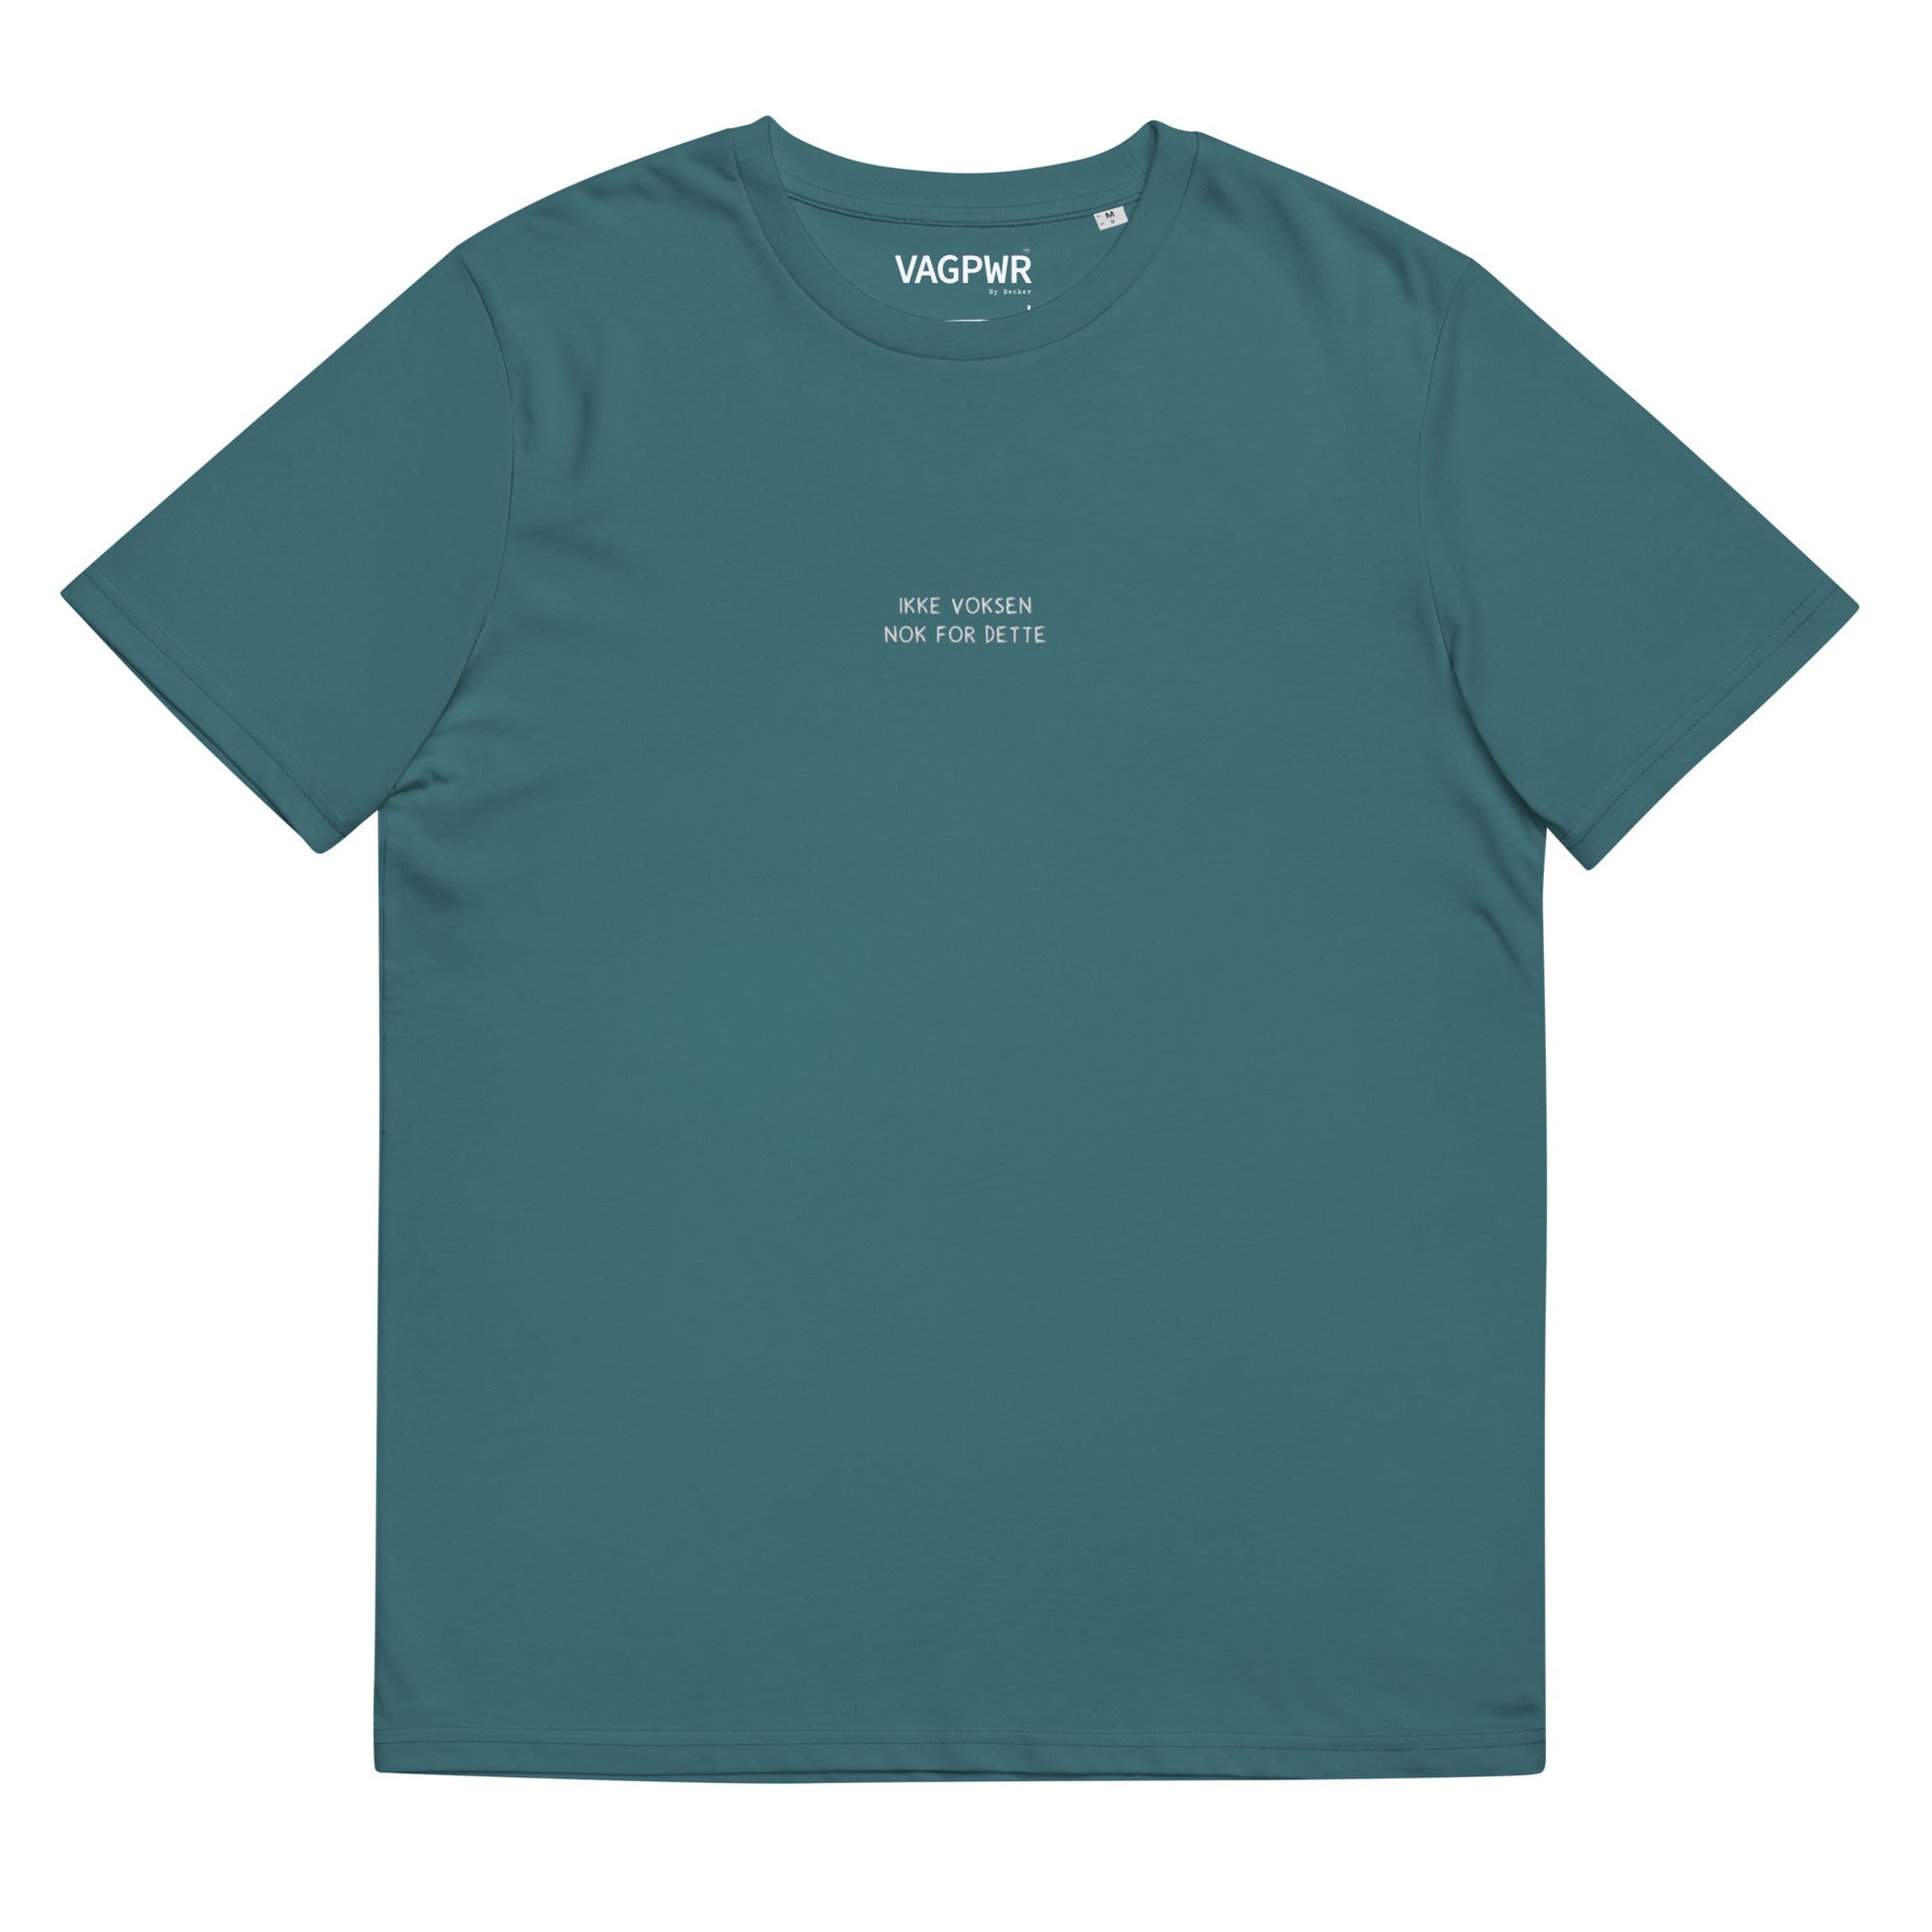 VAGPWR Stargazer / S Ikke voksen nok - Unisex organic cotton t-shirt